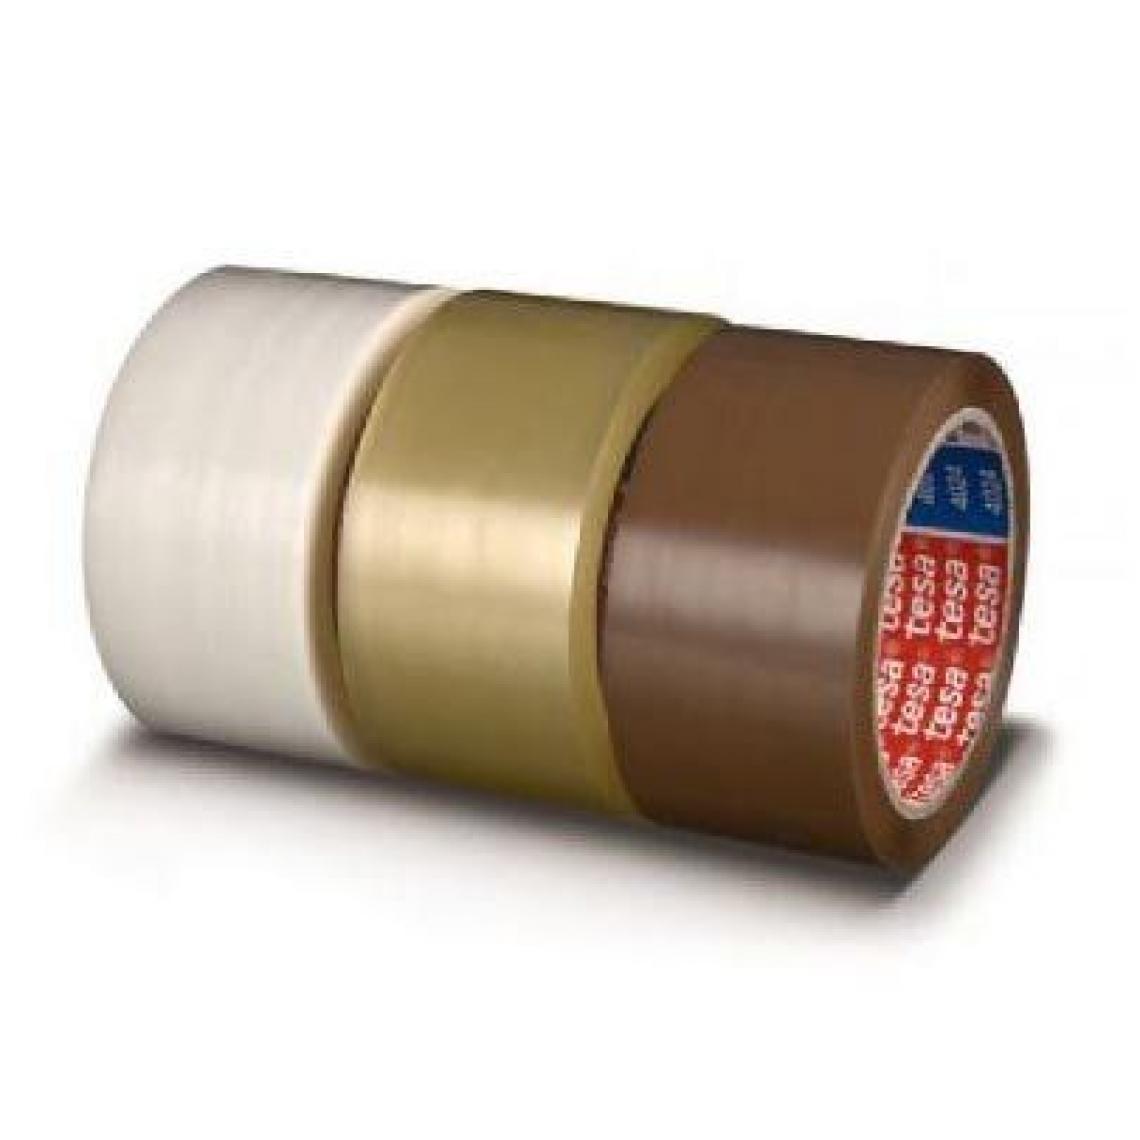 Inconnu - Ruban adhésif d'emballage tesa 04024-00202-04 transparent (L x l) 66 m x 38 mm acrylate 1 rouleau(x) - Colle & adhésif